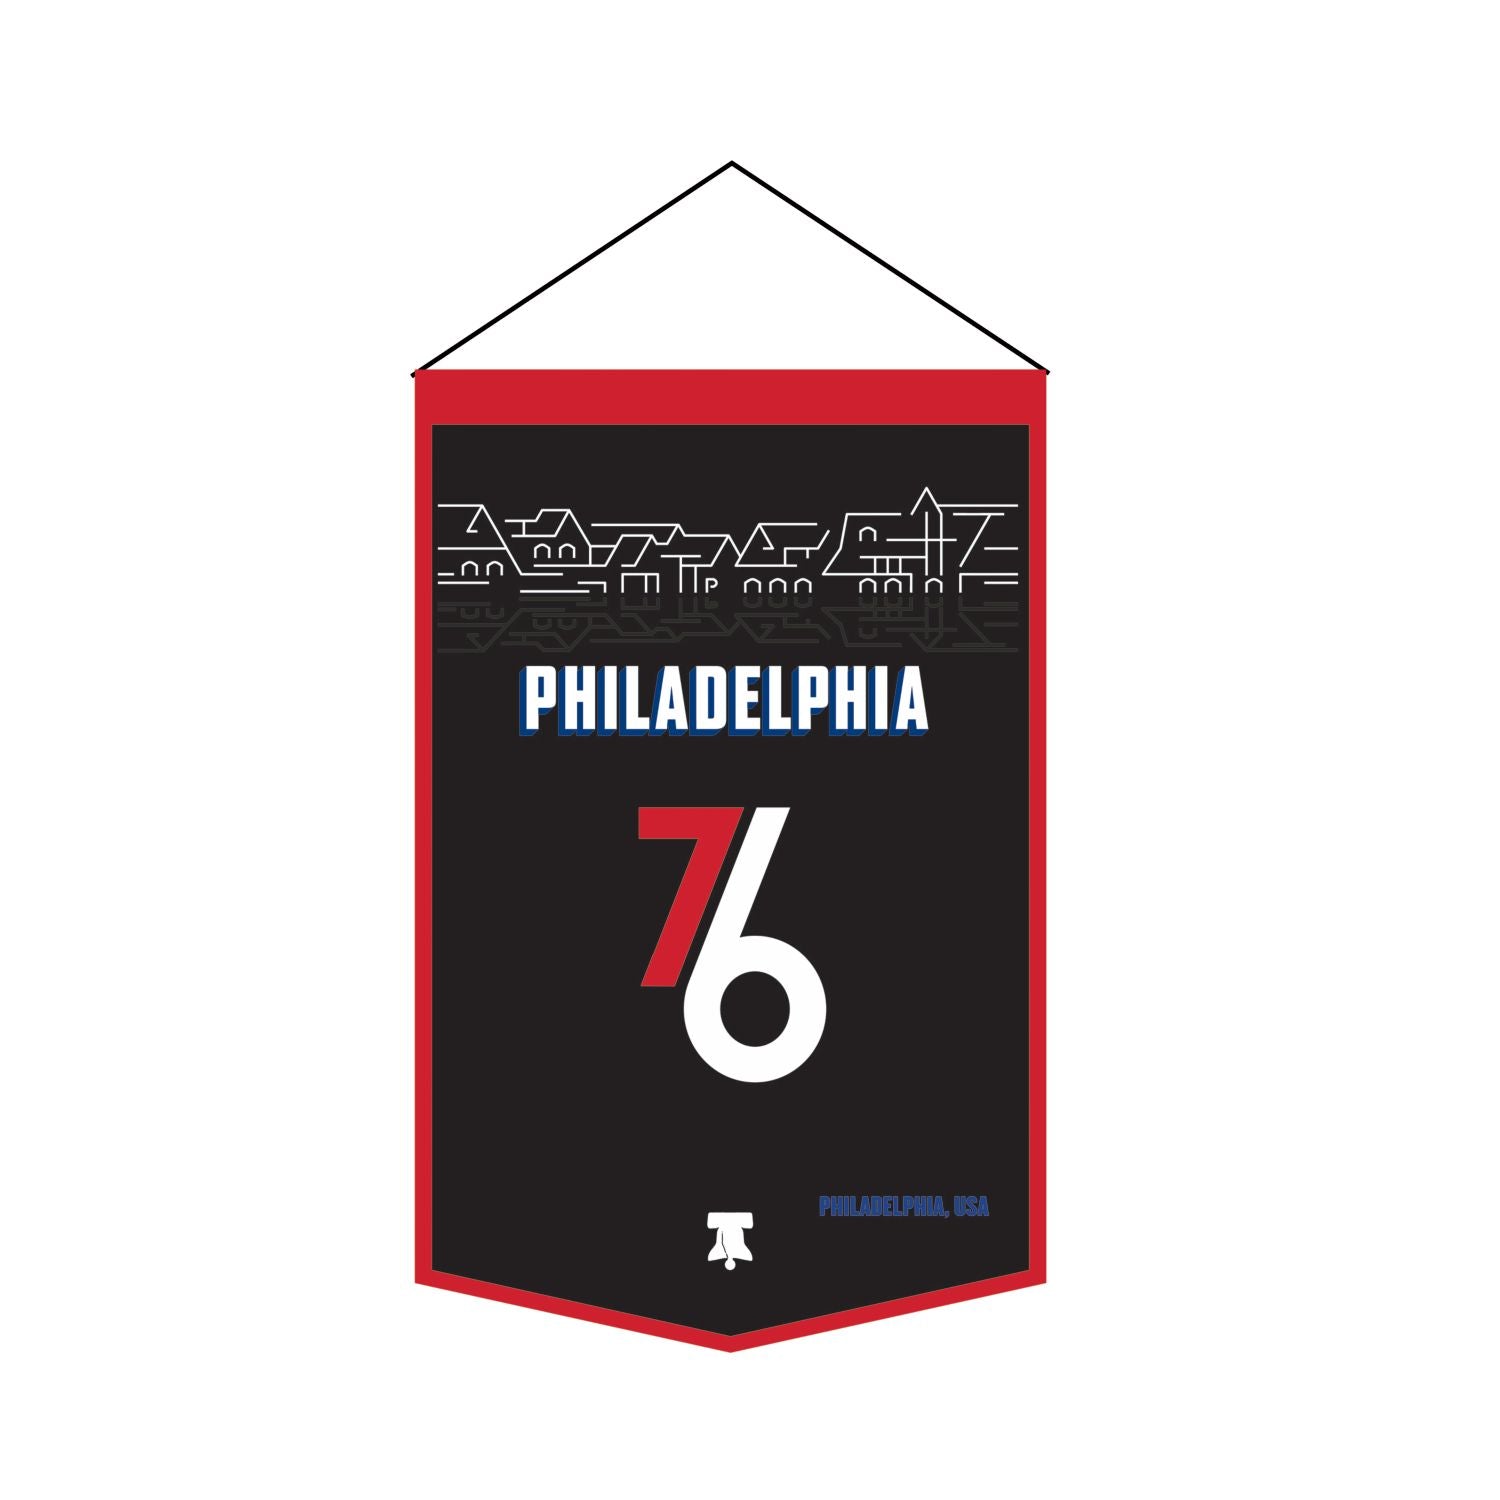 Philadelphia 76ers 20/21 City Edition Banner (Boat House Row) - Dynasty Sports & Framing 